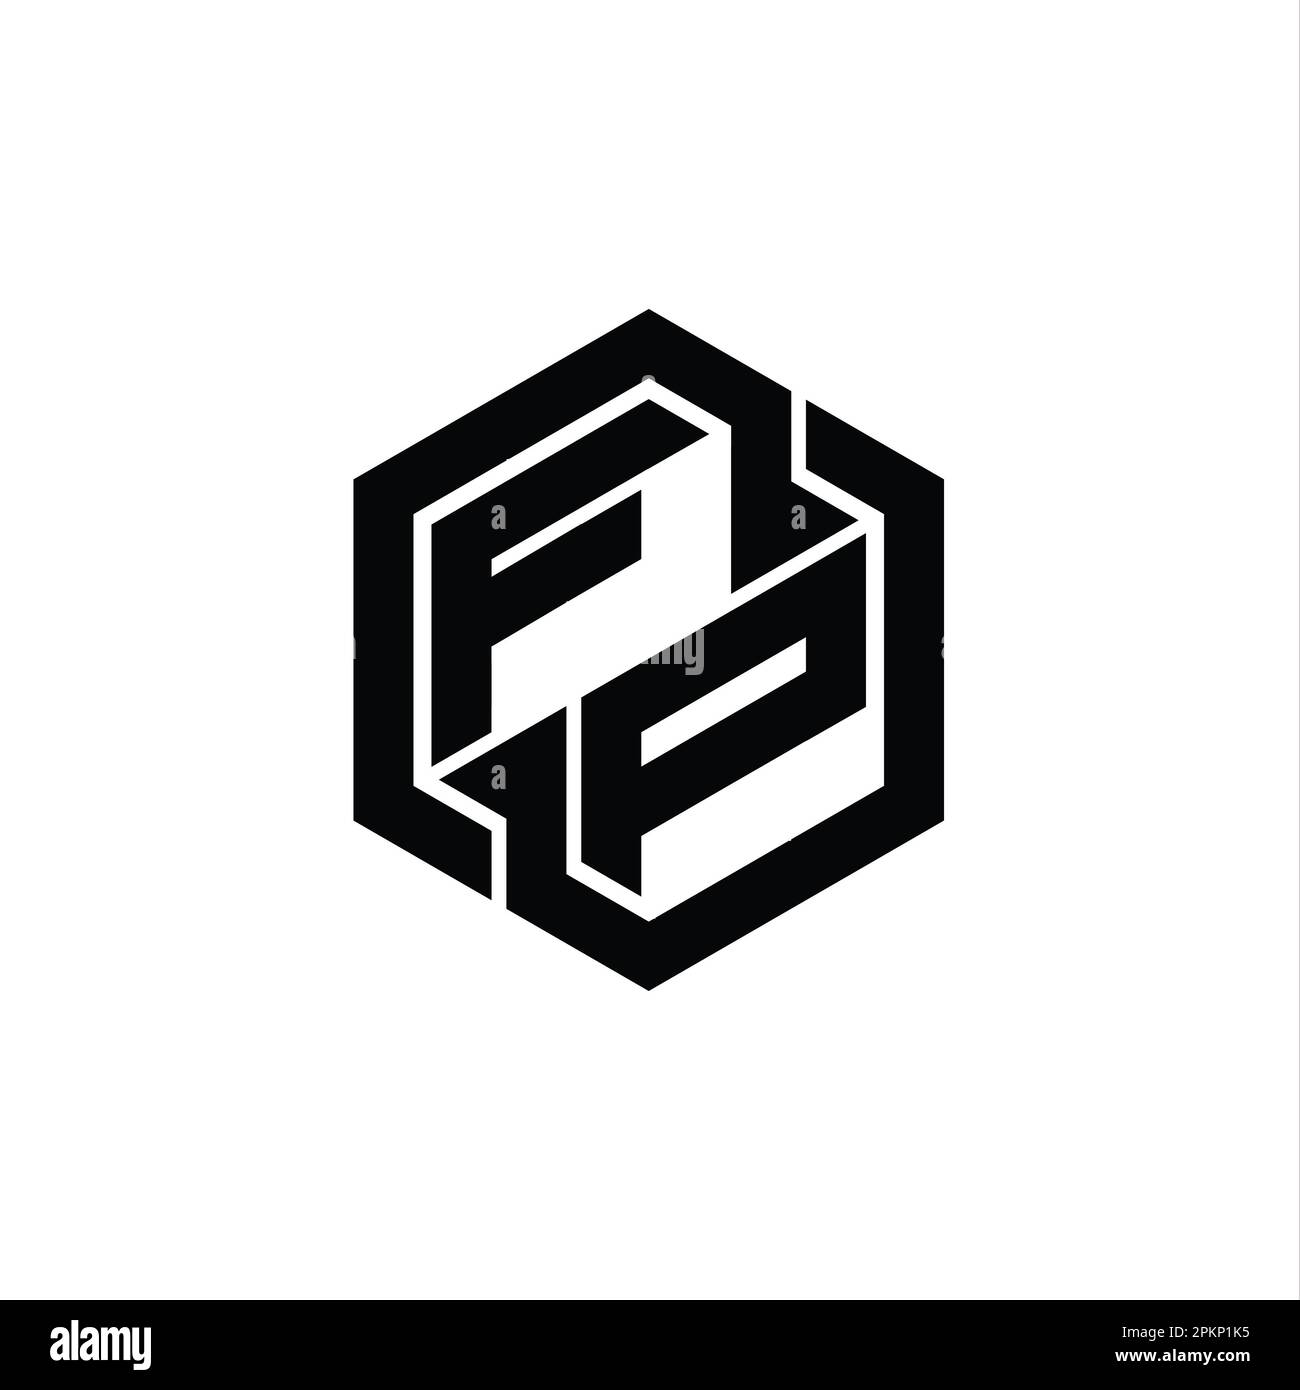 FP Logo monogram gaming with hexagon geometric shape design template Stock Photo